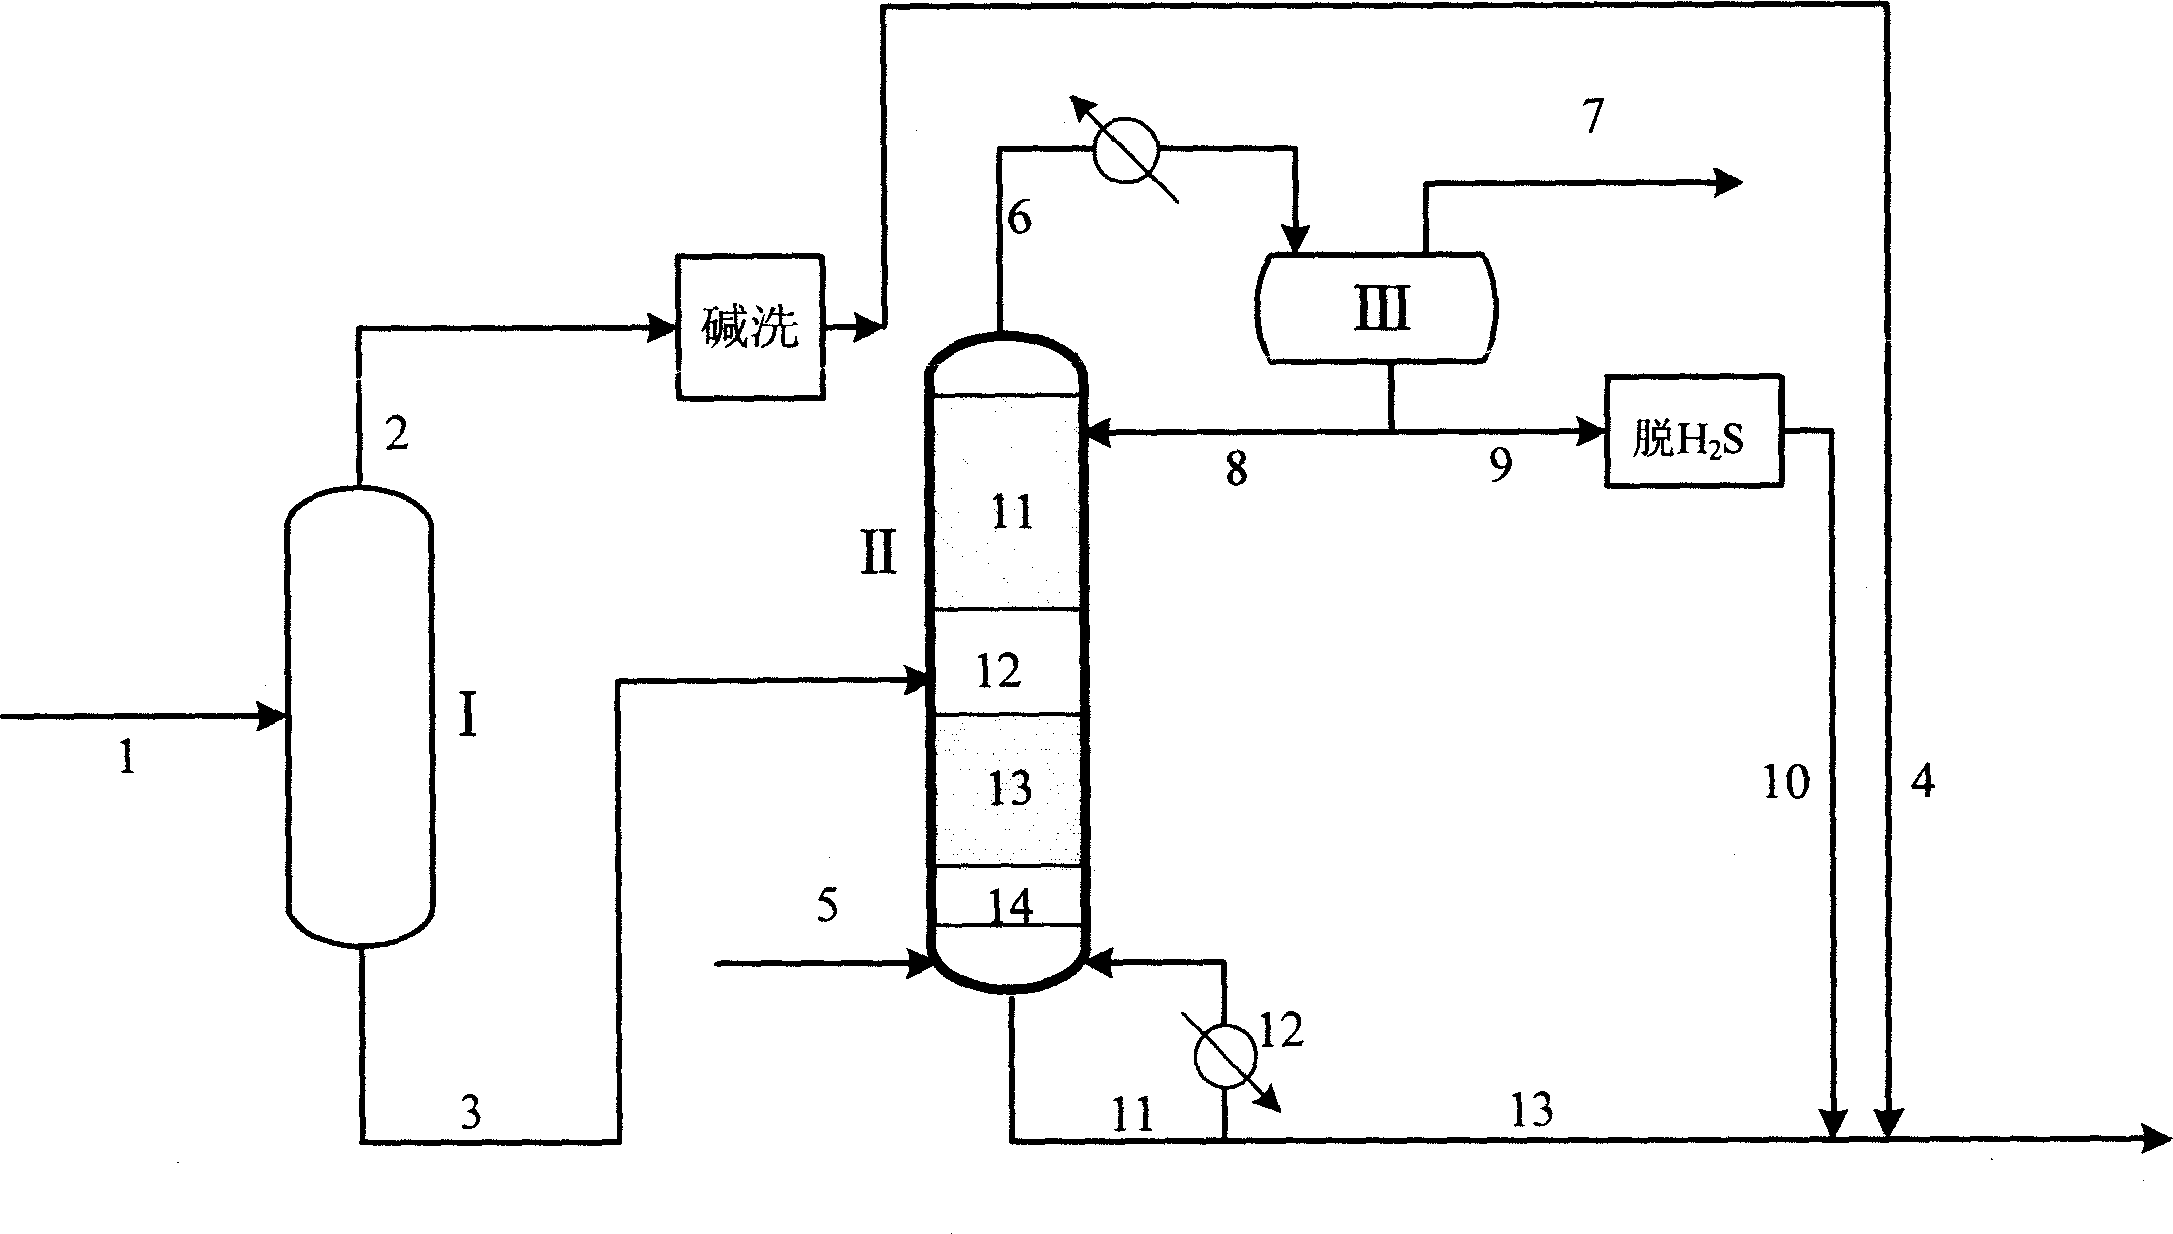 Gasoline hydrodesulfurization method